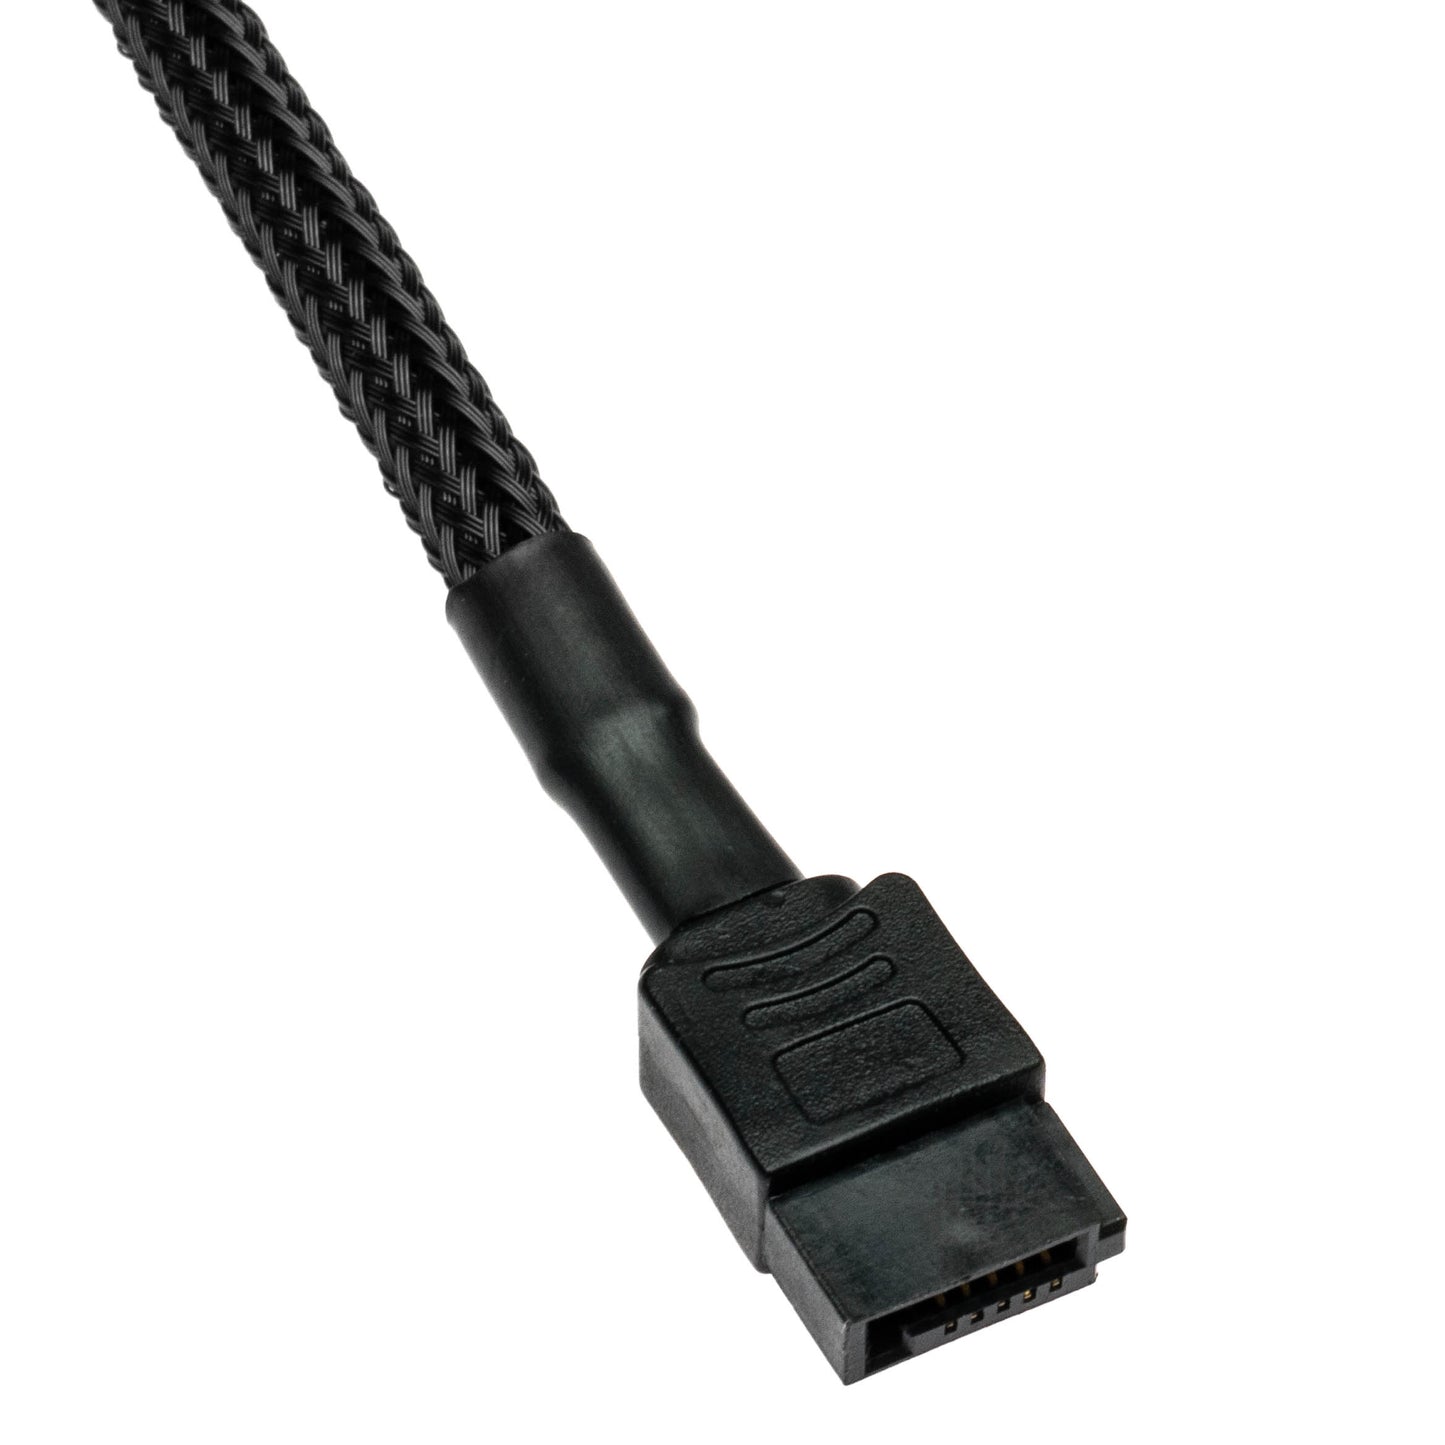 4-Pin Molex to 6-Pin SATA Slimline Disk Drive Adapter Cable